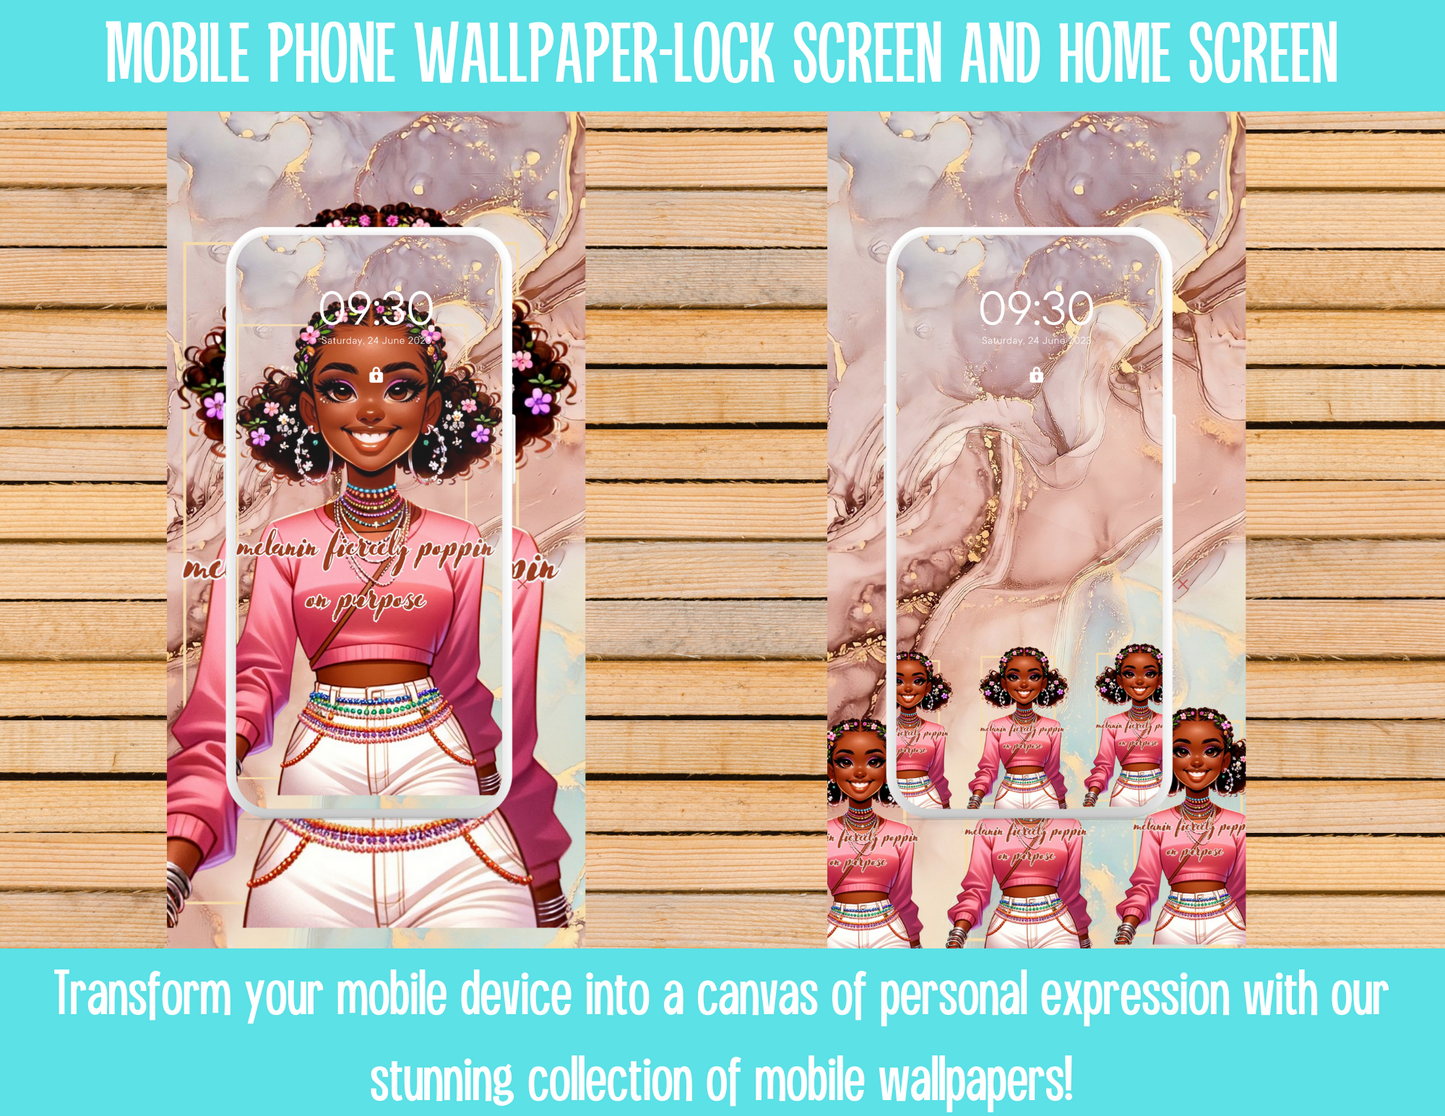 Melanin Poppin Mobile Phone Wallpaper- Lock Screen and Home Screen